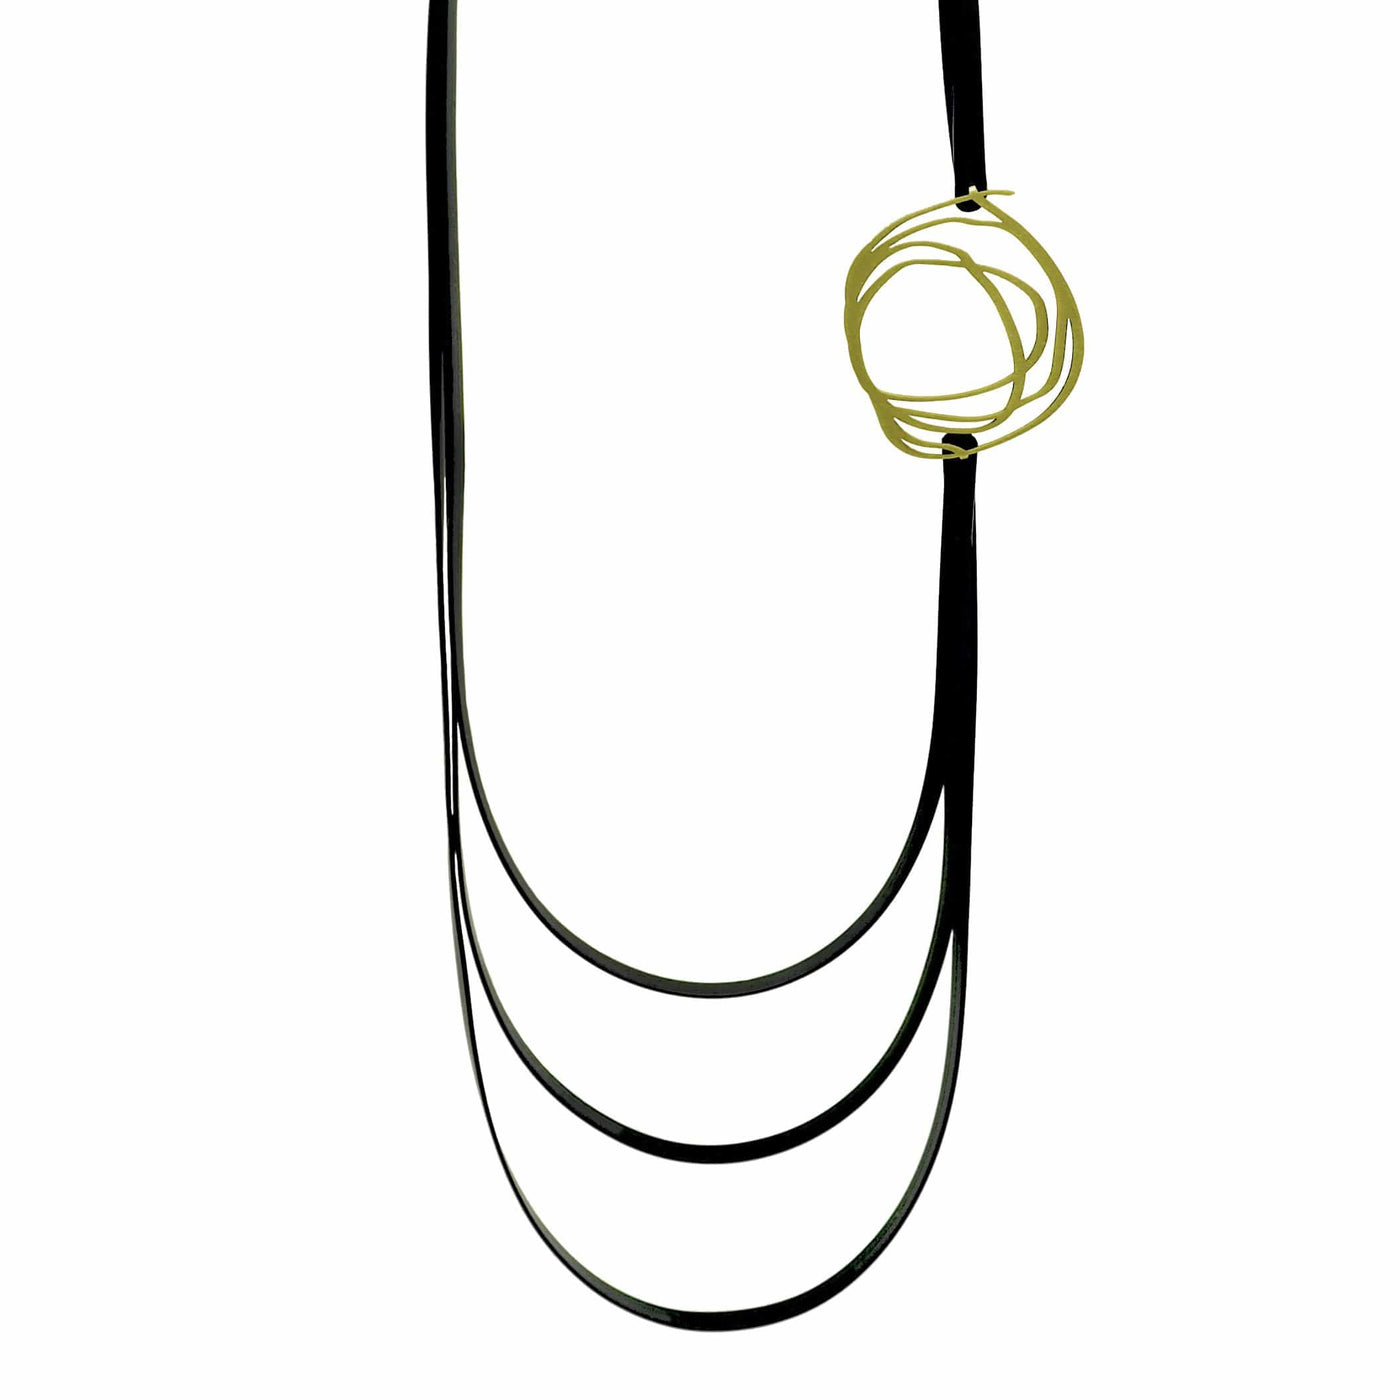 Journey Necklace - 22ct Matt Gold Plate - inSync design